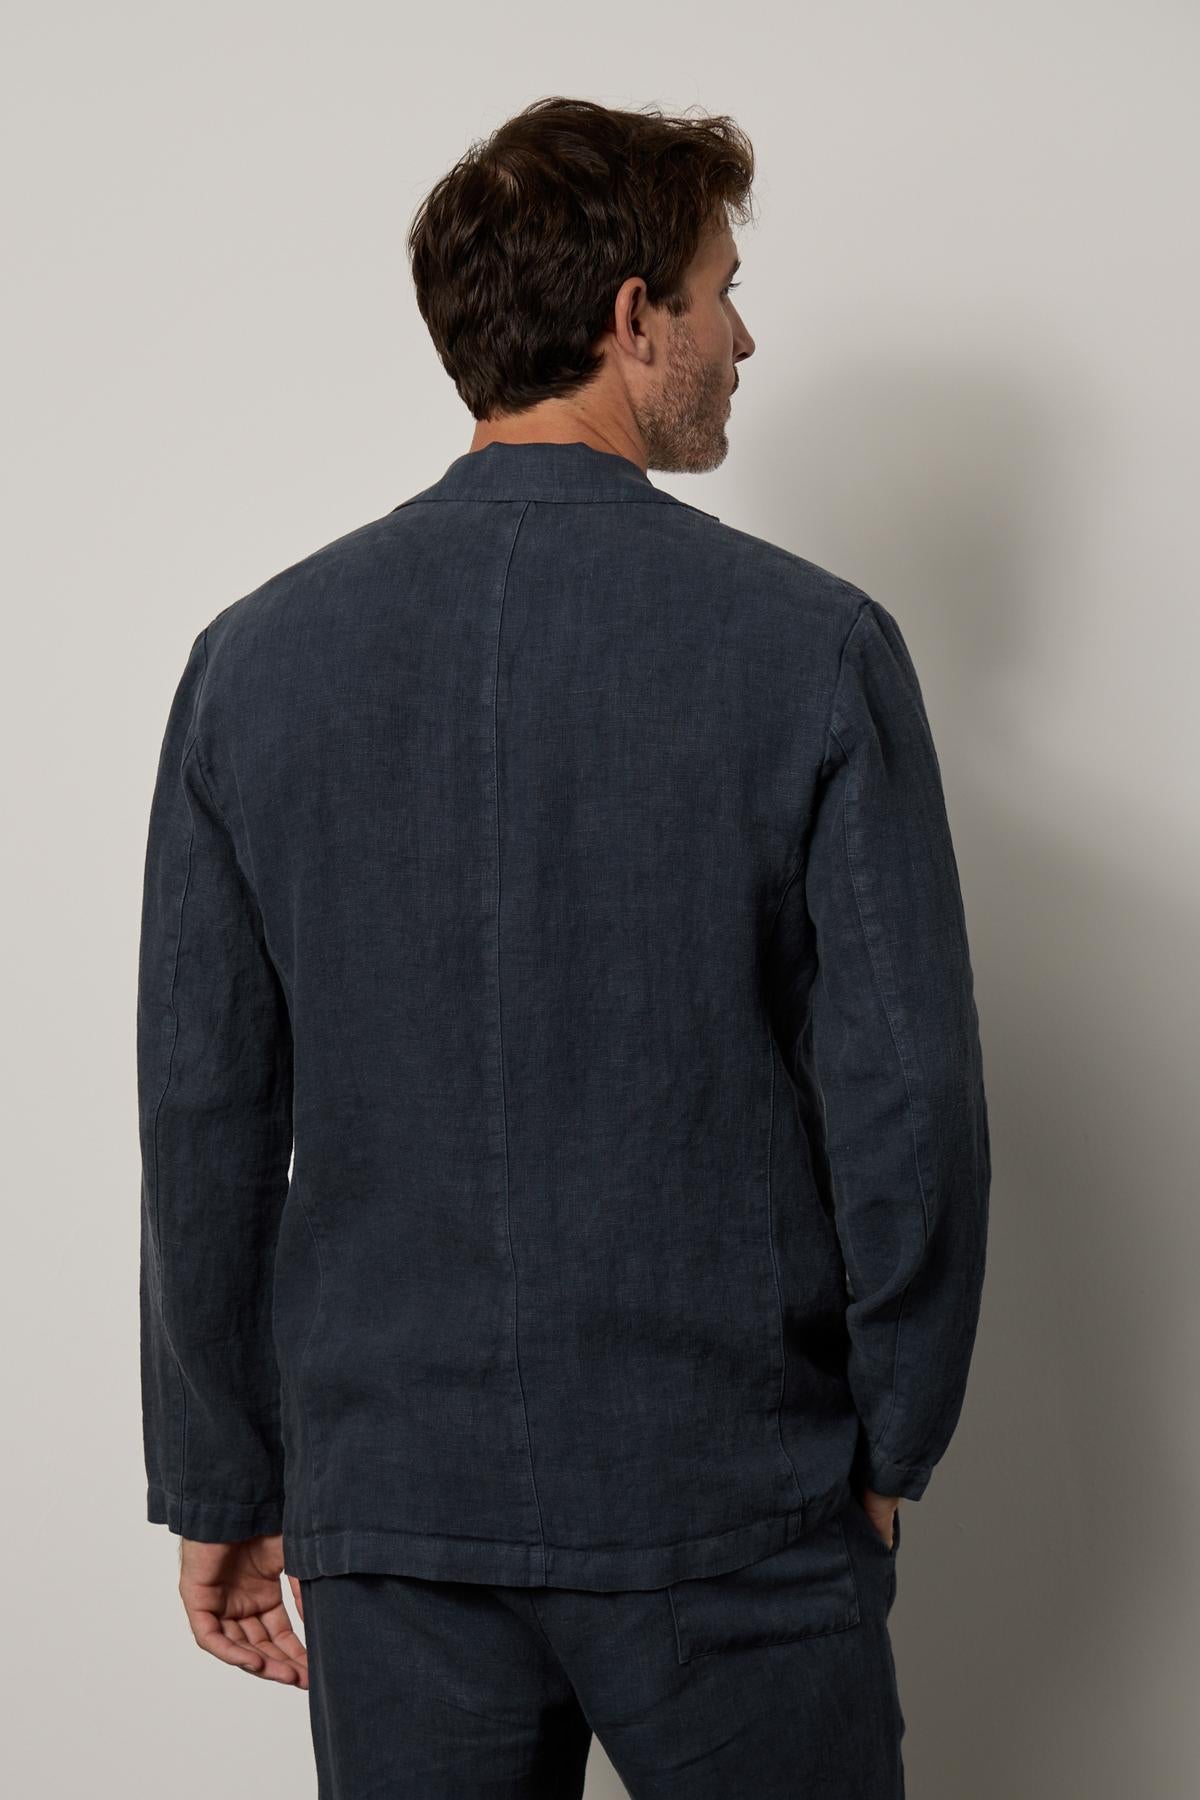 the back view of a man wearing a Velvet by Graham & Spencer JOSHUA LINEN BLAZER.-26311108788417